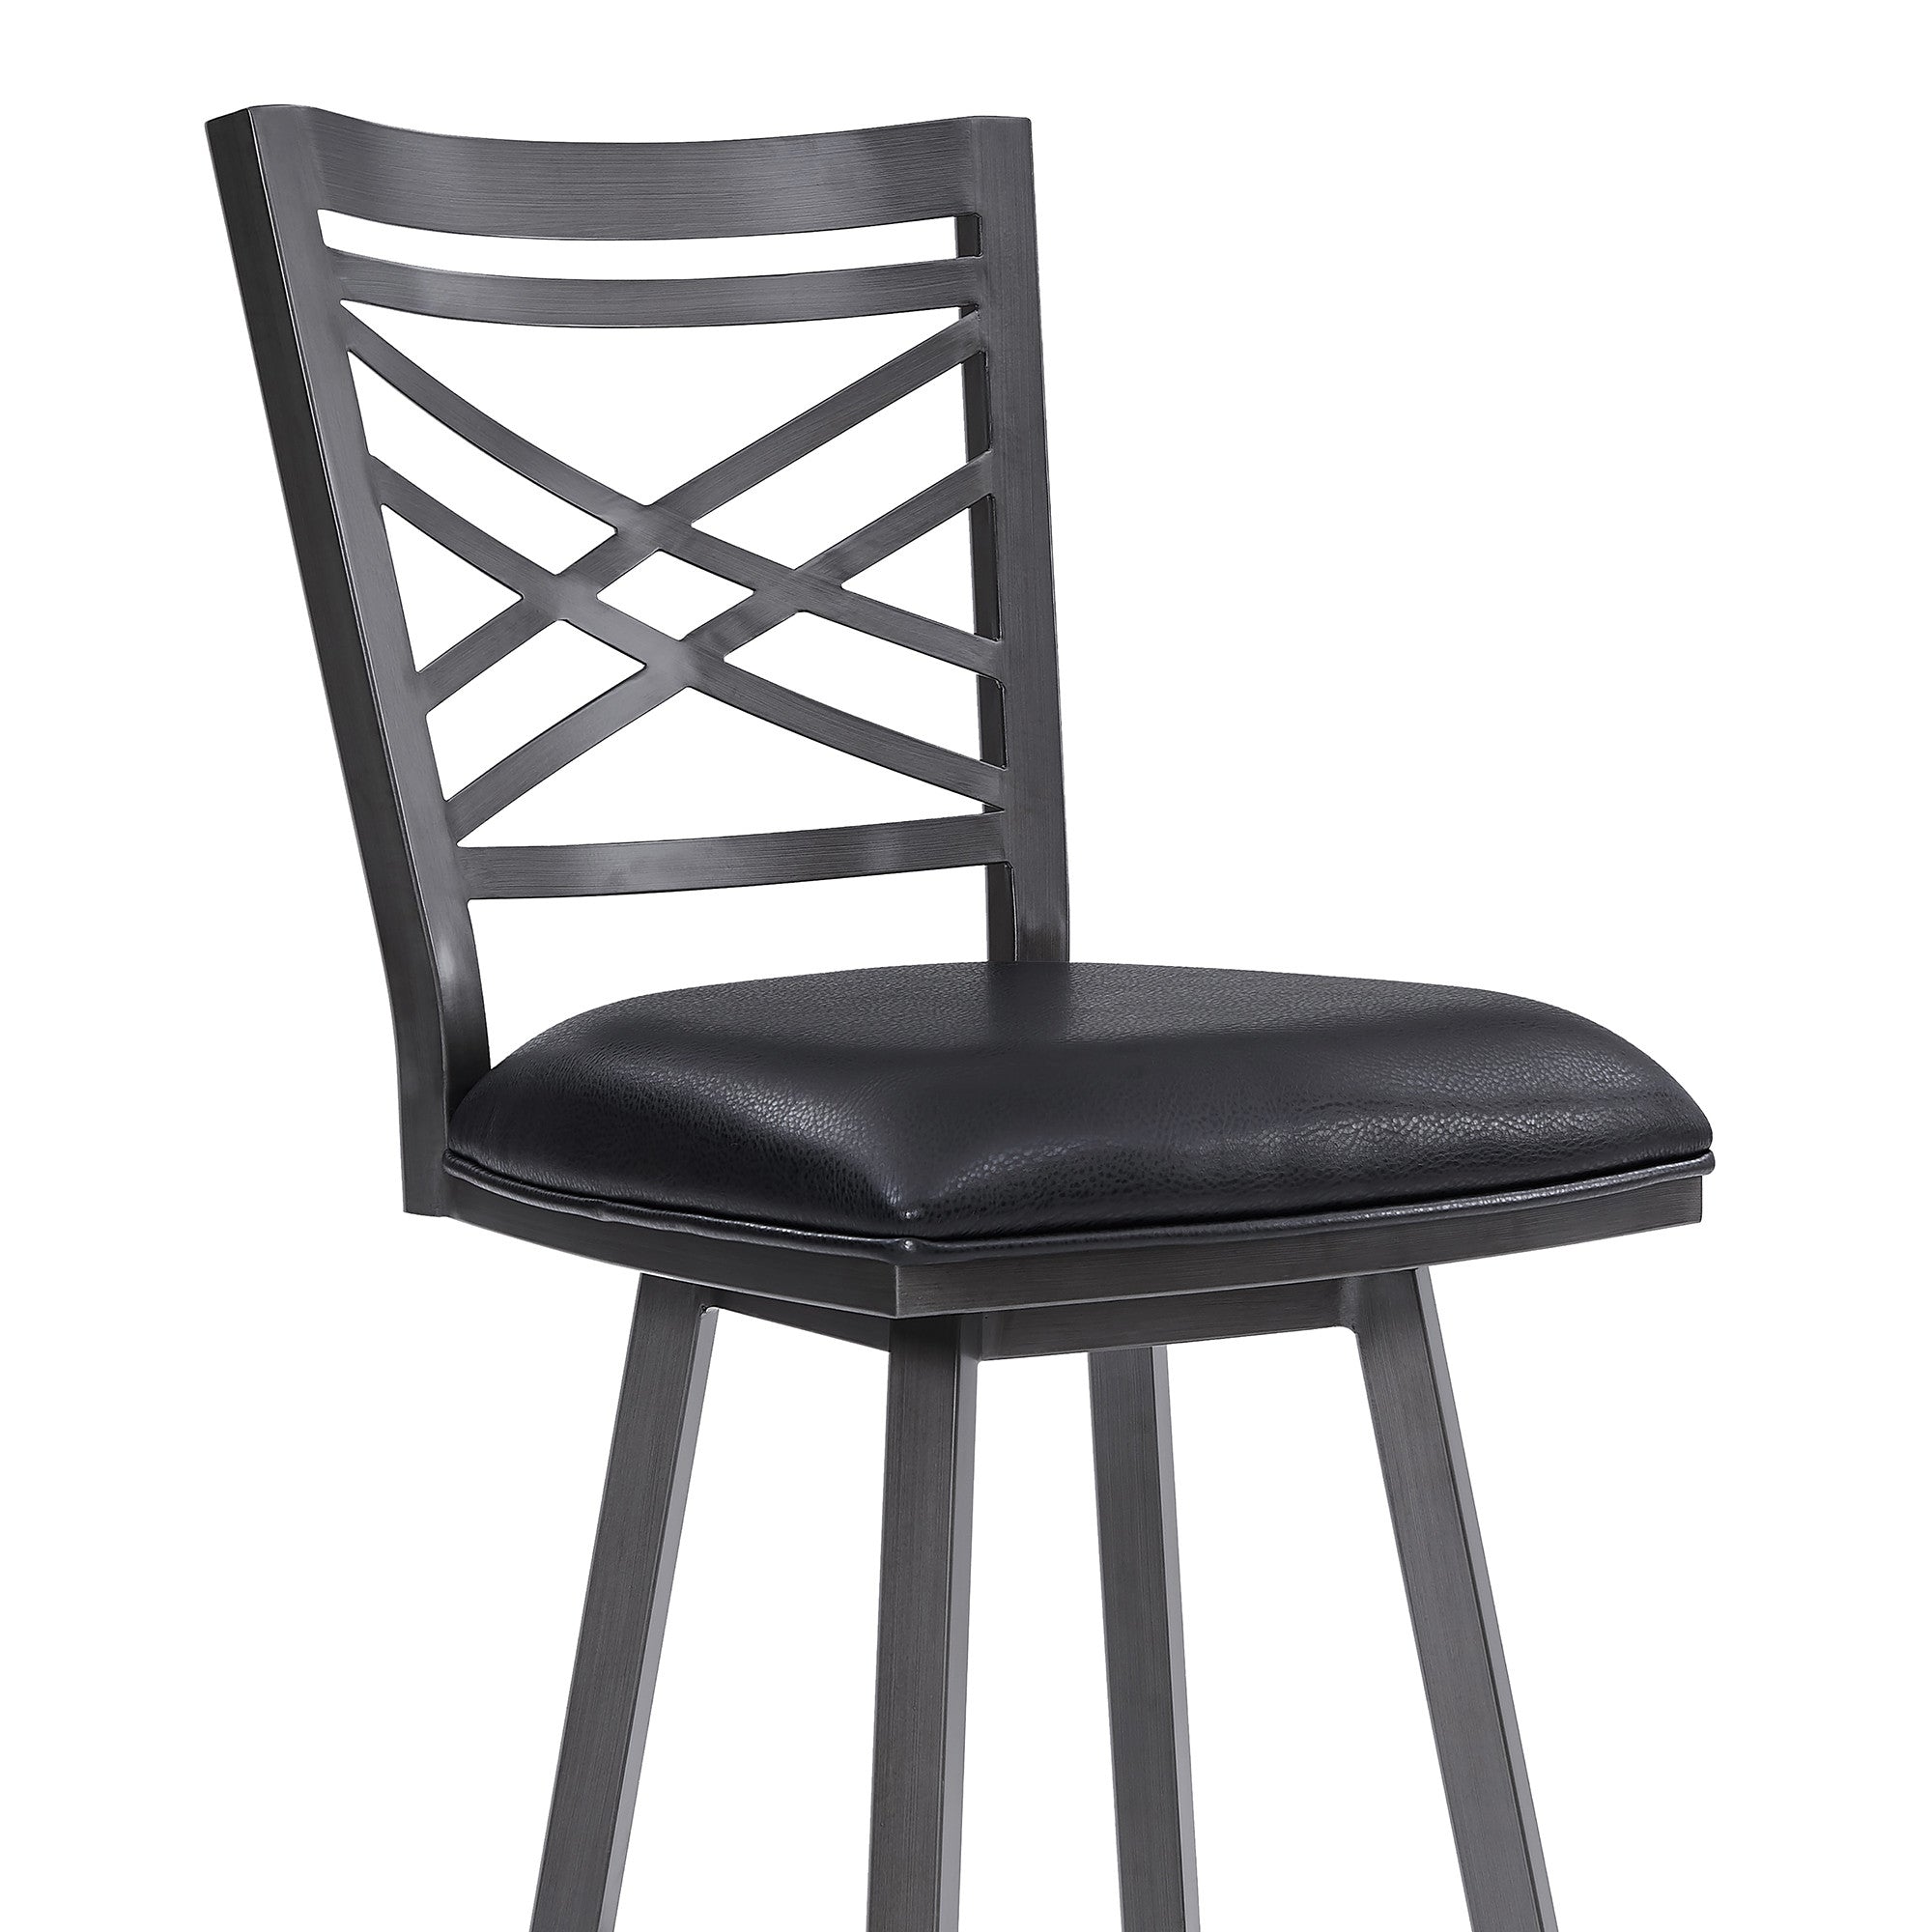 30" Black Iron Bar Height Bar Chair